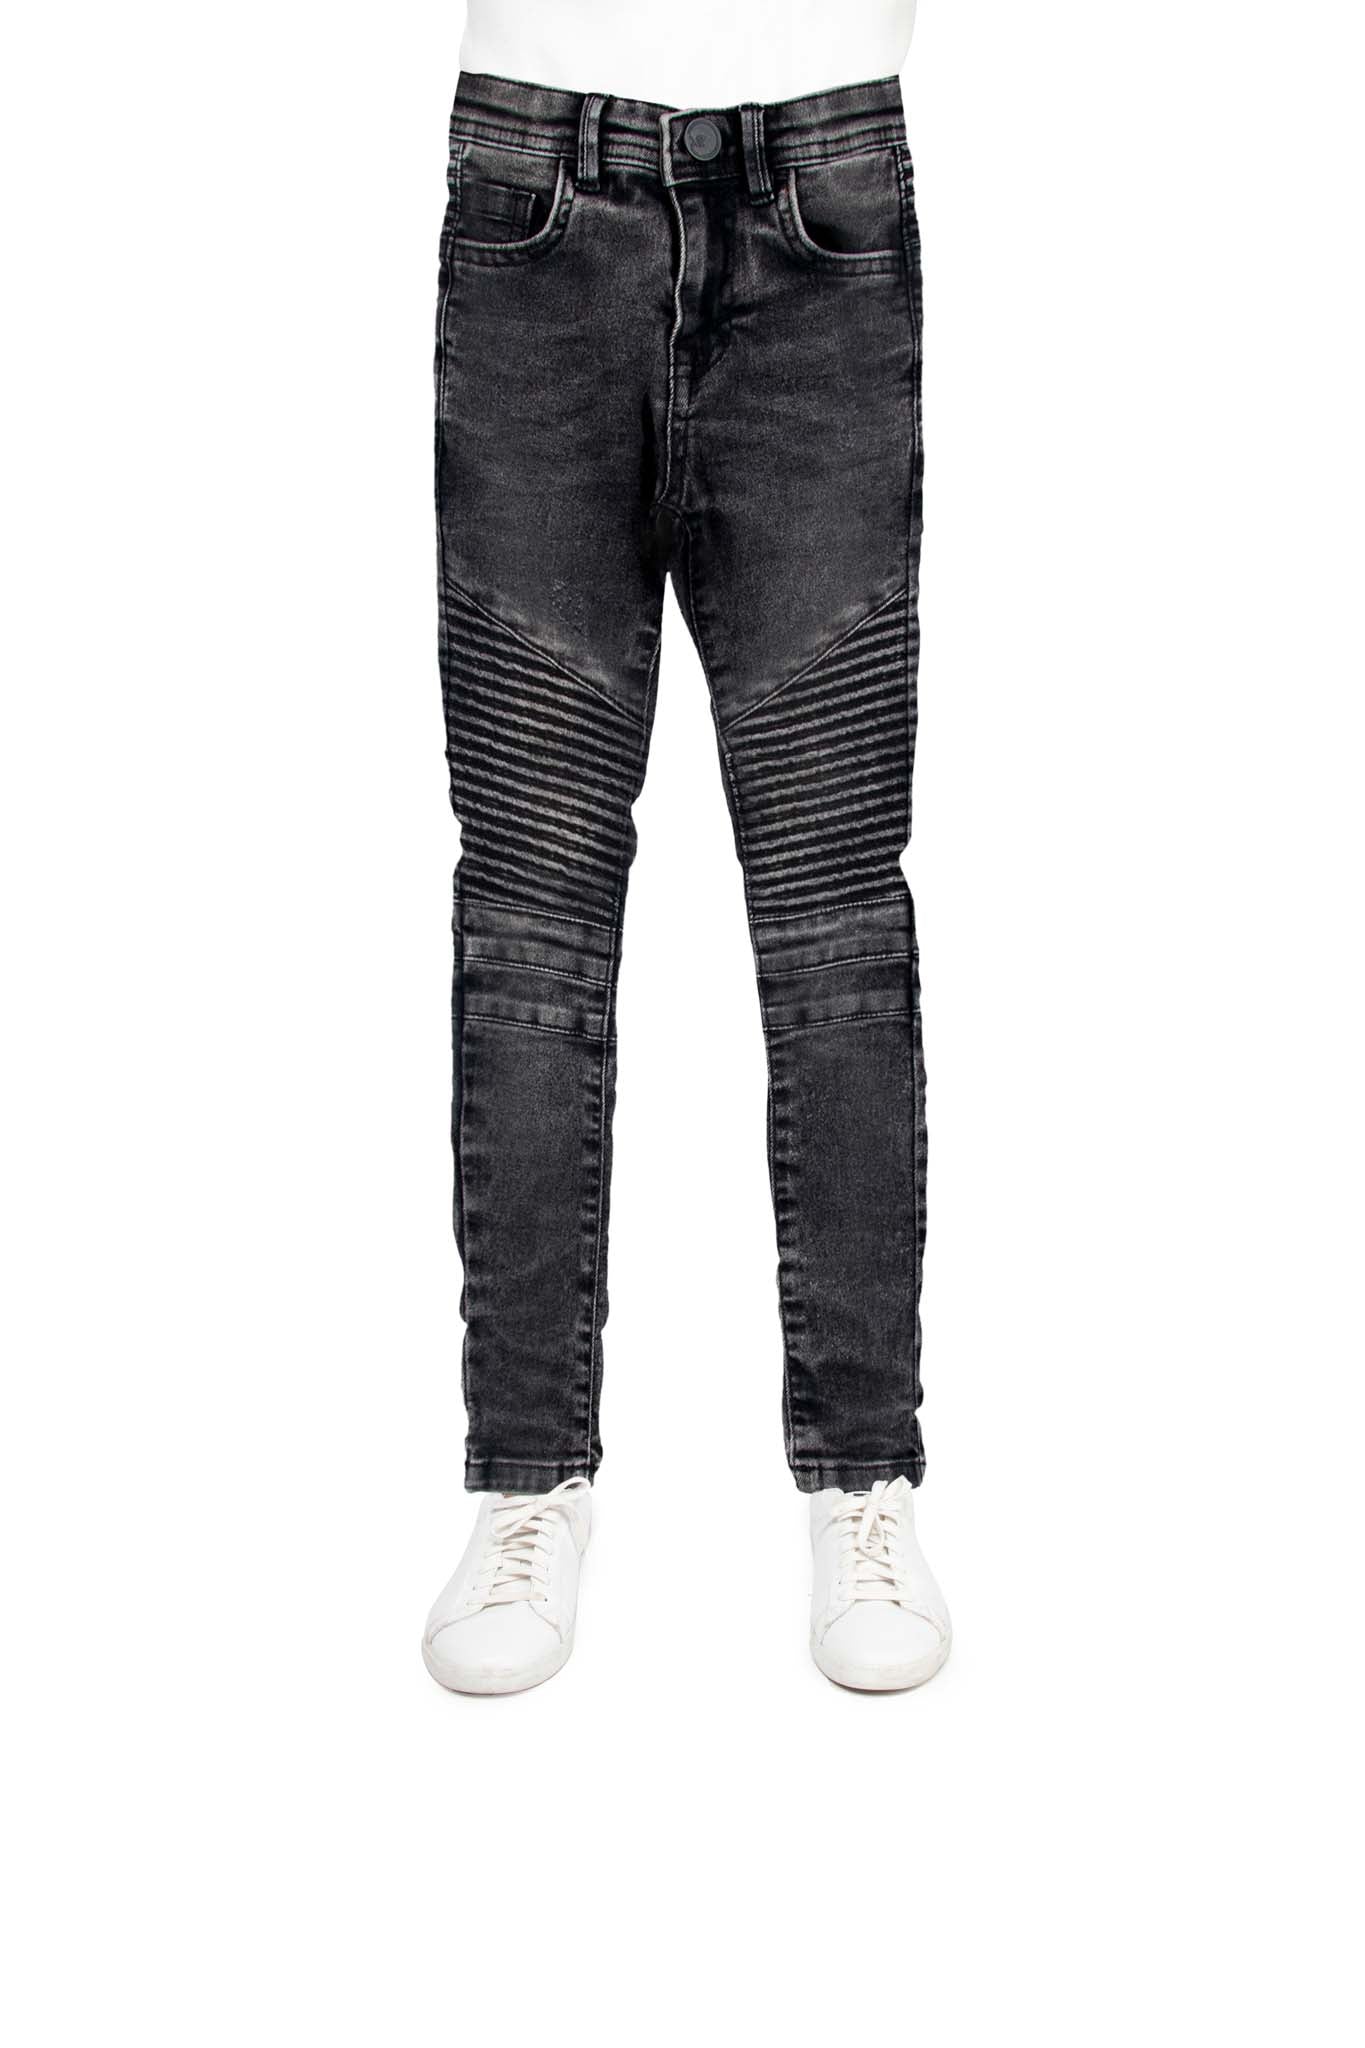 Jeans Boys Slim Fit Biker Distressed Washed Jeans Pants – JEANS